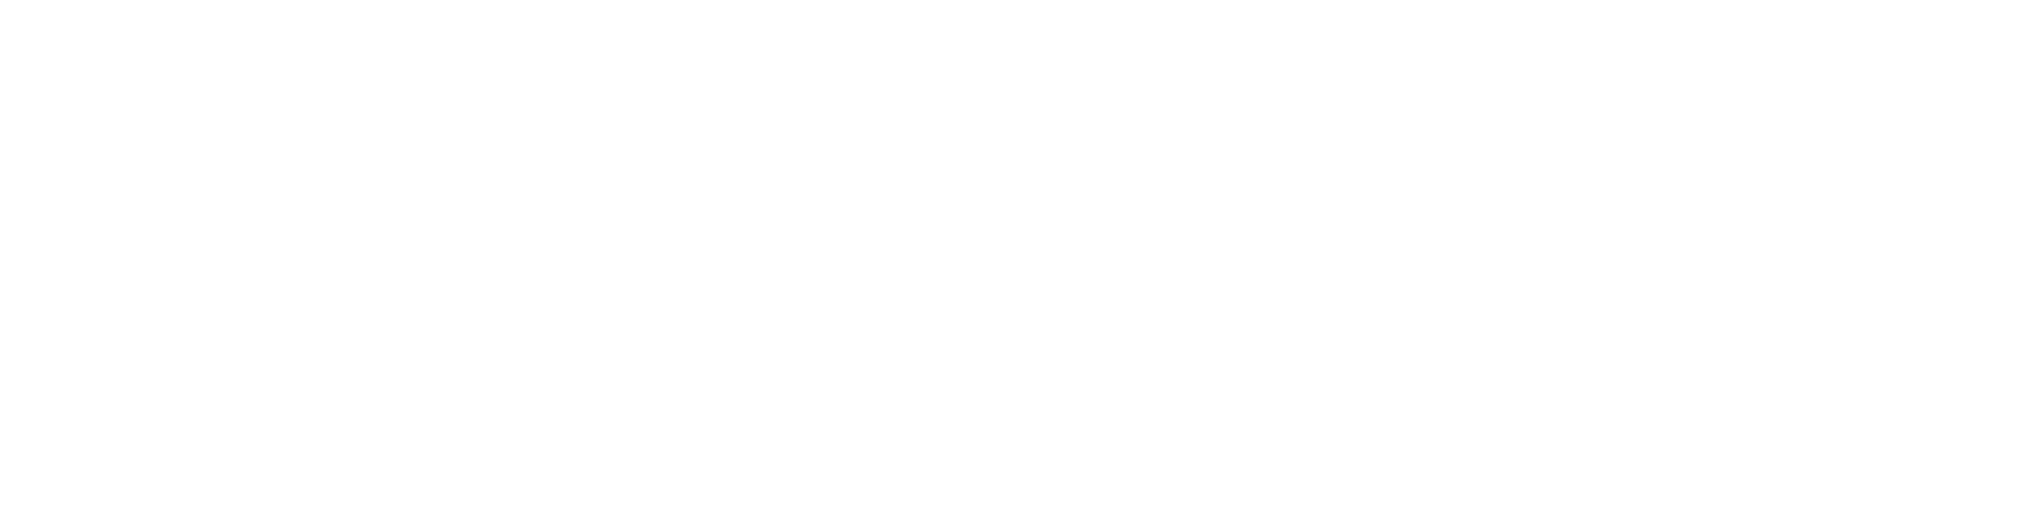 Himmlische Herbergen Logo